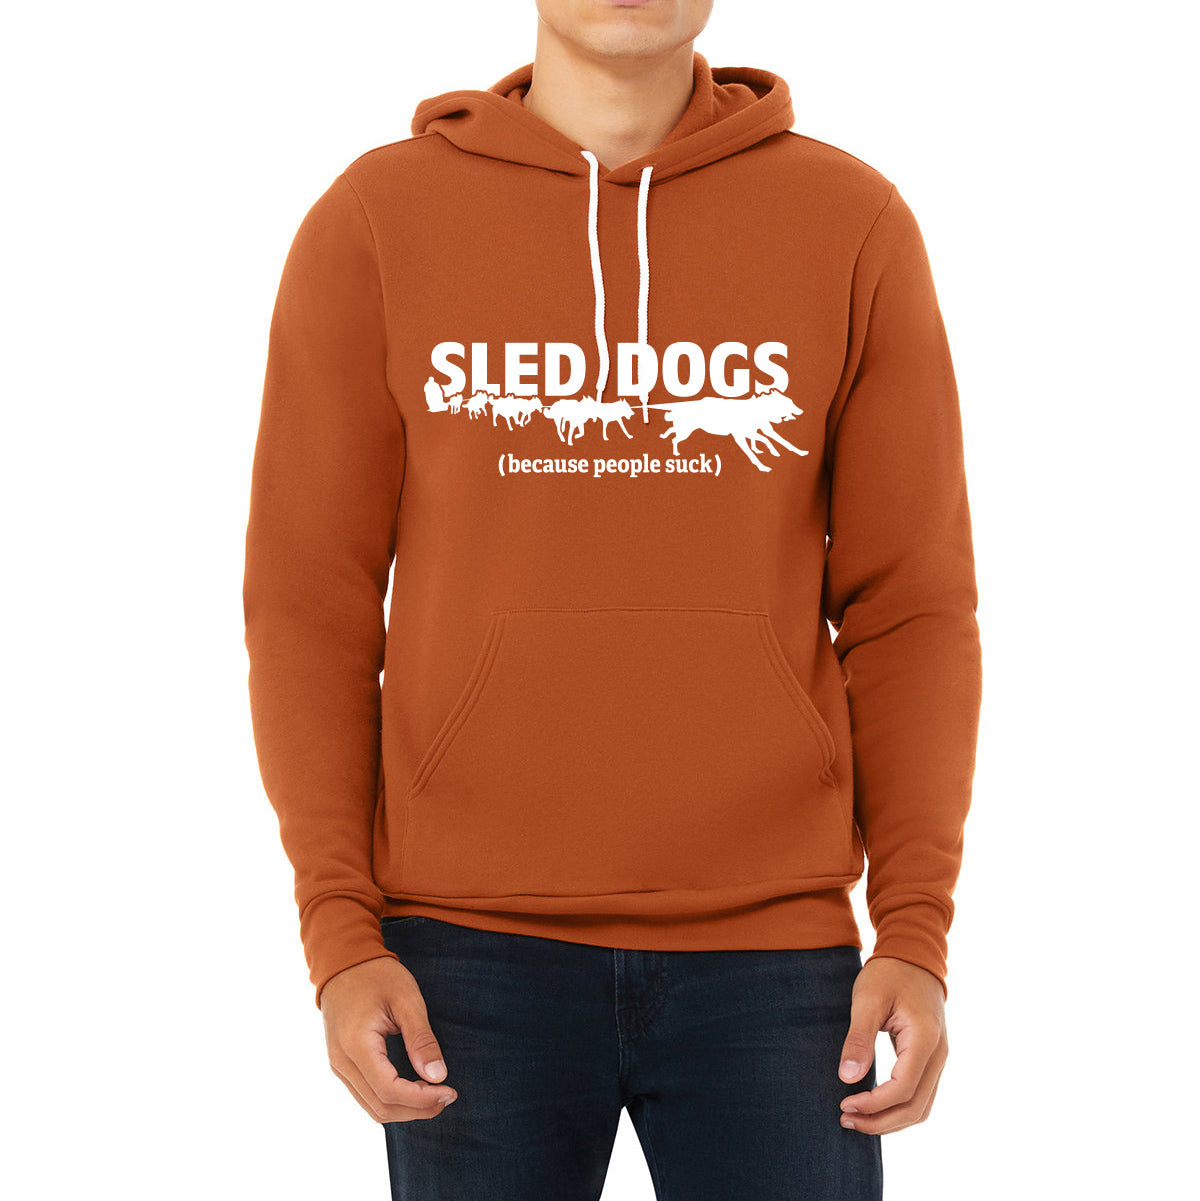 SLED DOGS (because people suck) - Sponge Fleece Hoodie - Siberian Husky - Alaskan Malamute - Sled Dog - Unisex